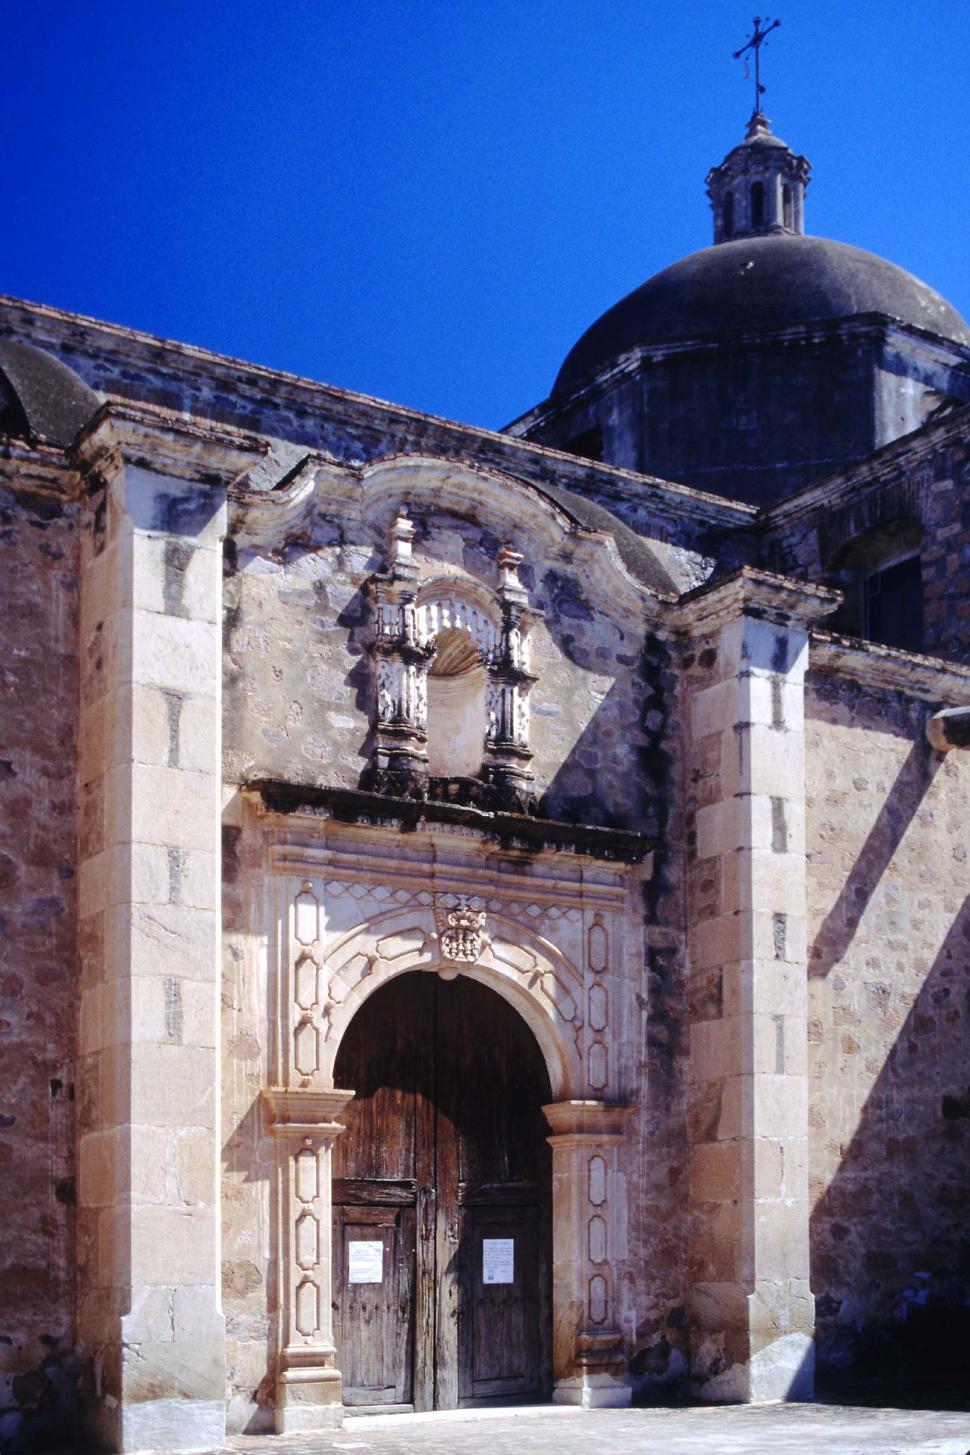 Free Image of Ancient facade in Alamos Sonora Mexico 